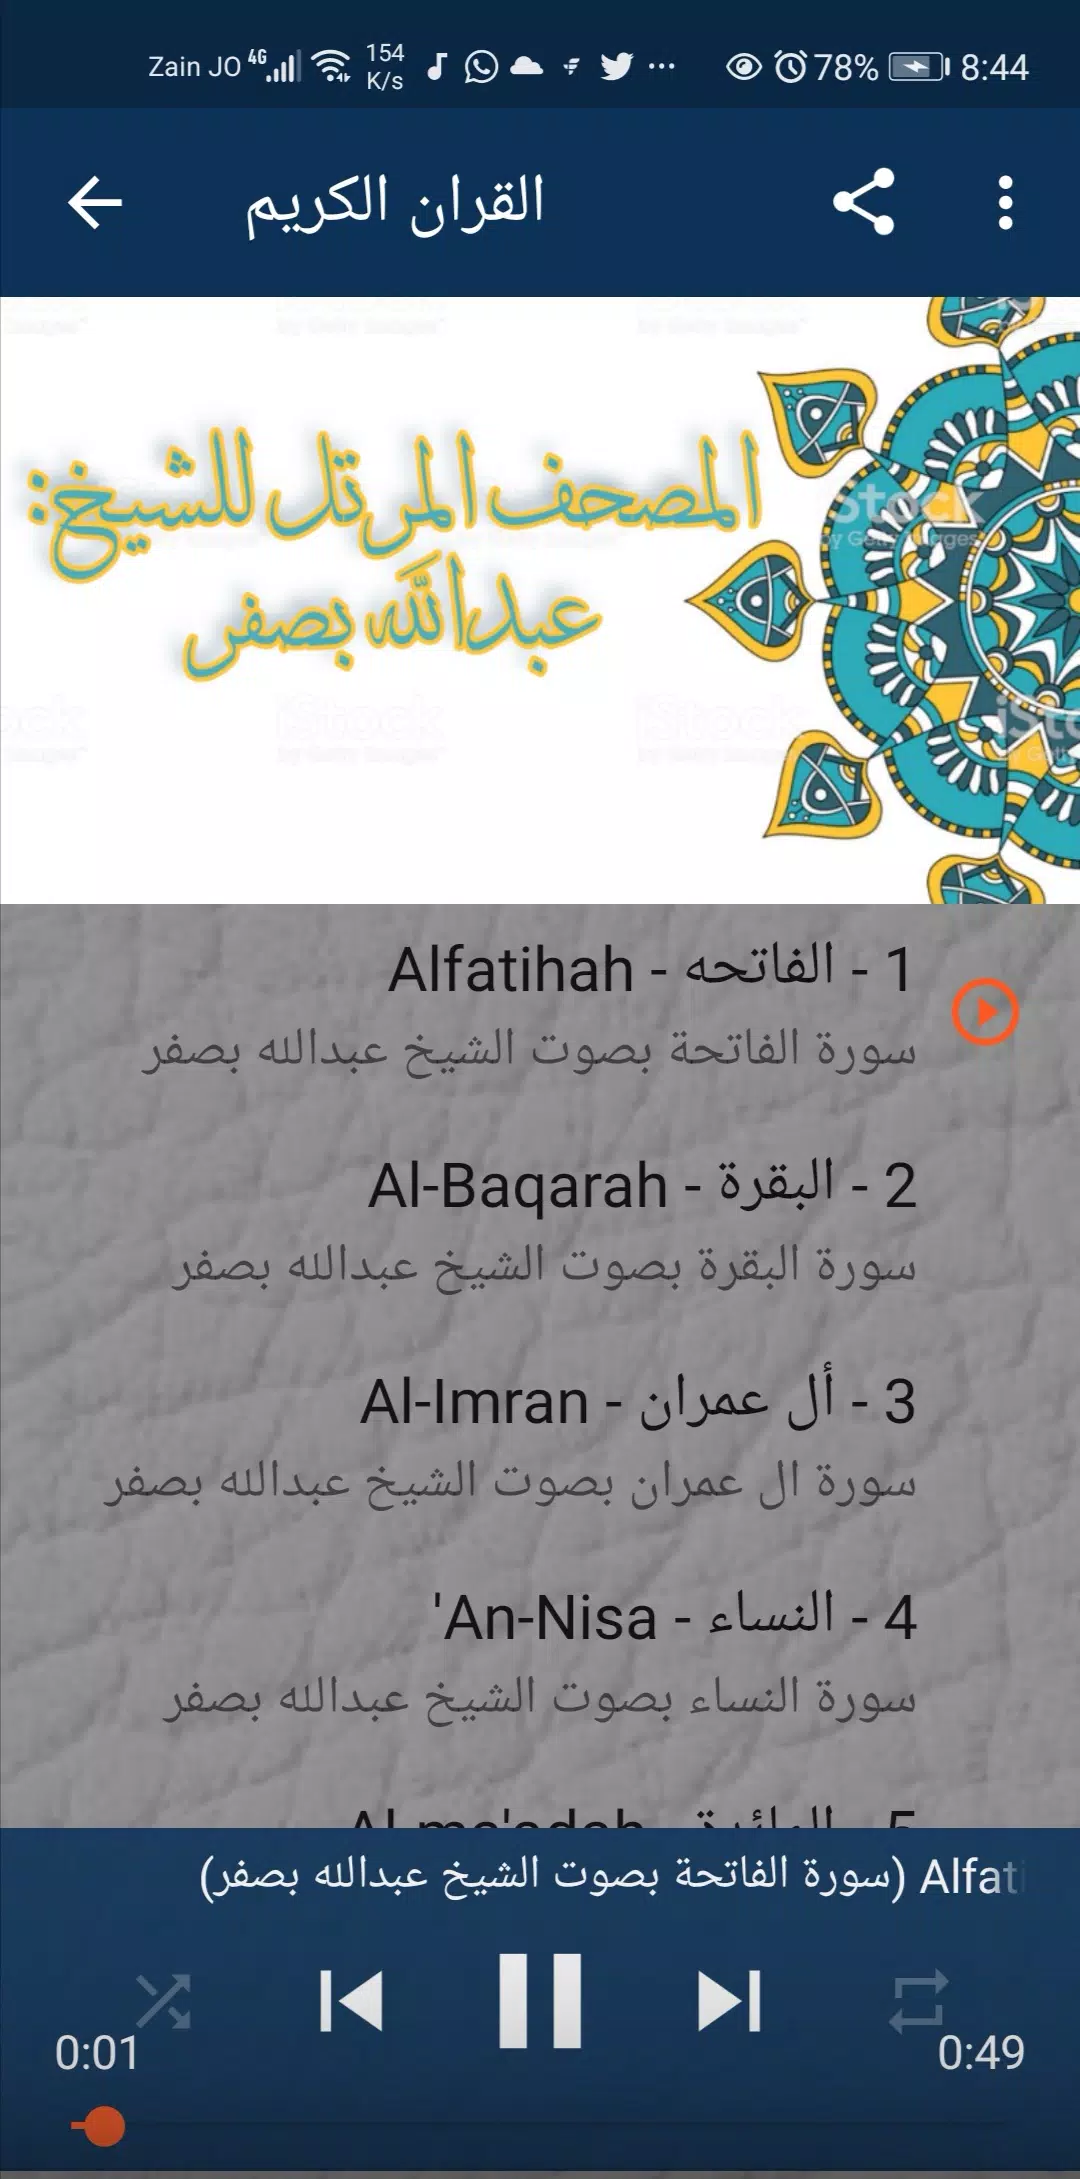 Скачать عبدالله بصفر - القرآن الكريم كامل APK для Android